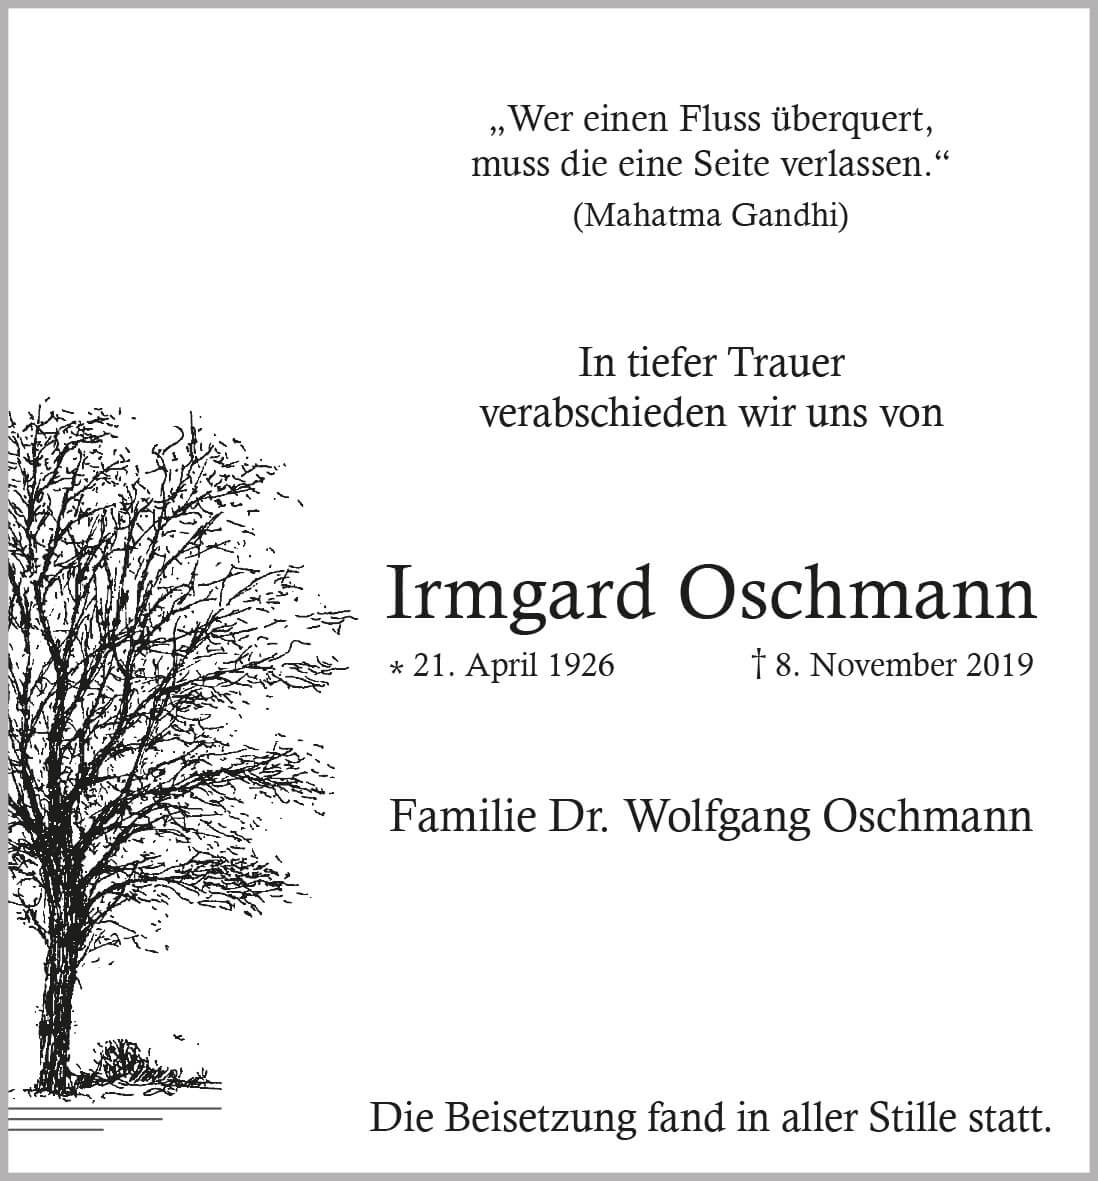 Irmgard Oschmann † 8. 11. 2019